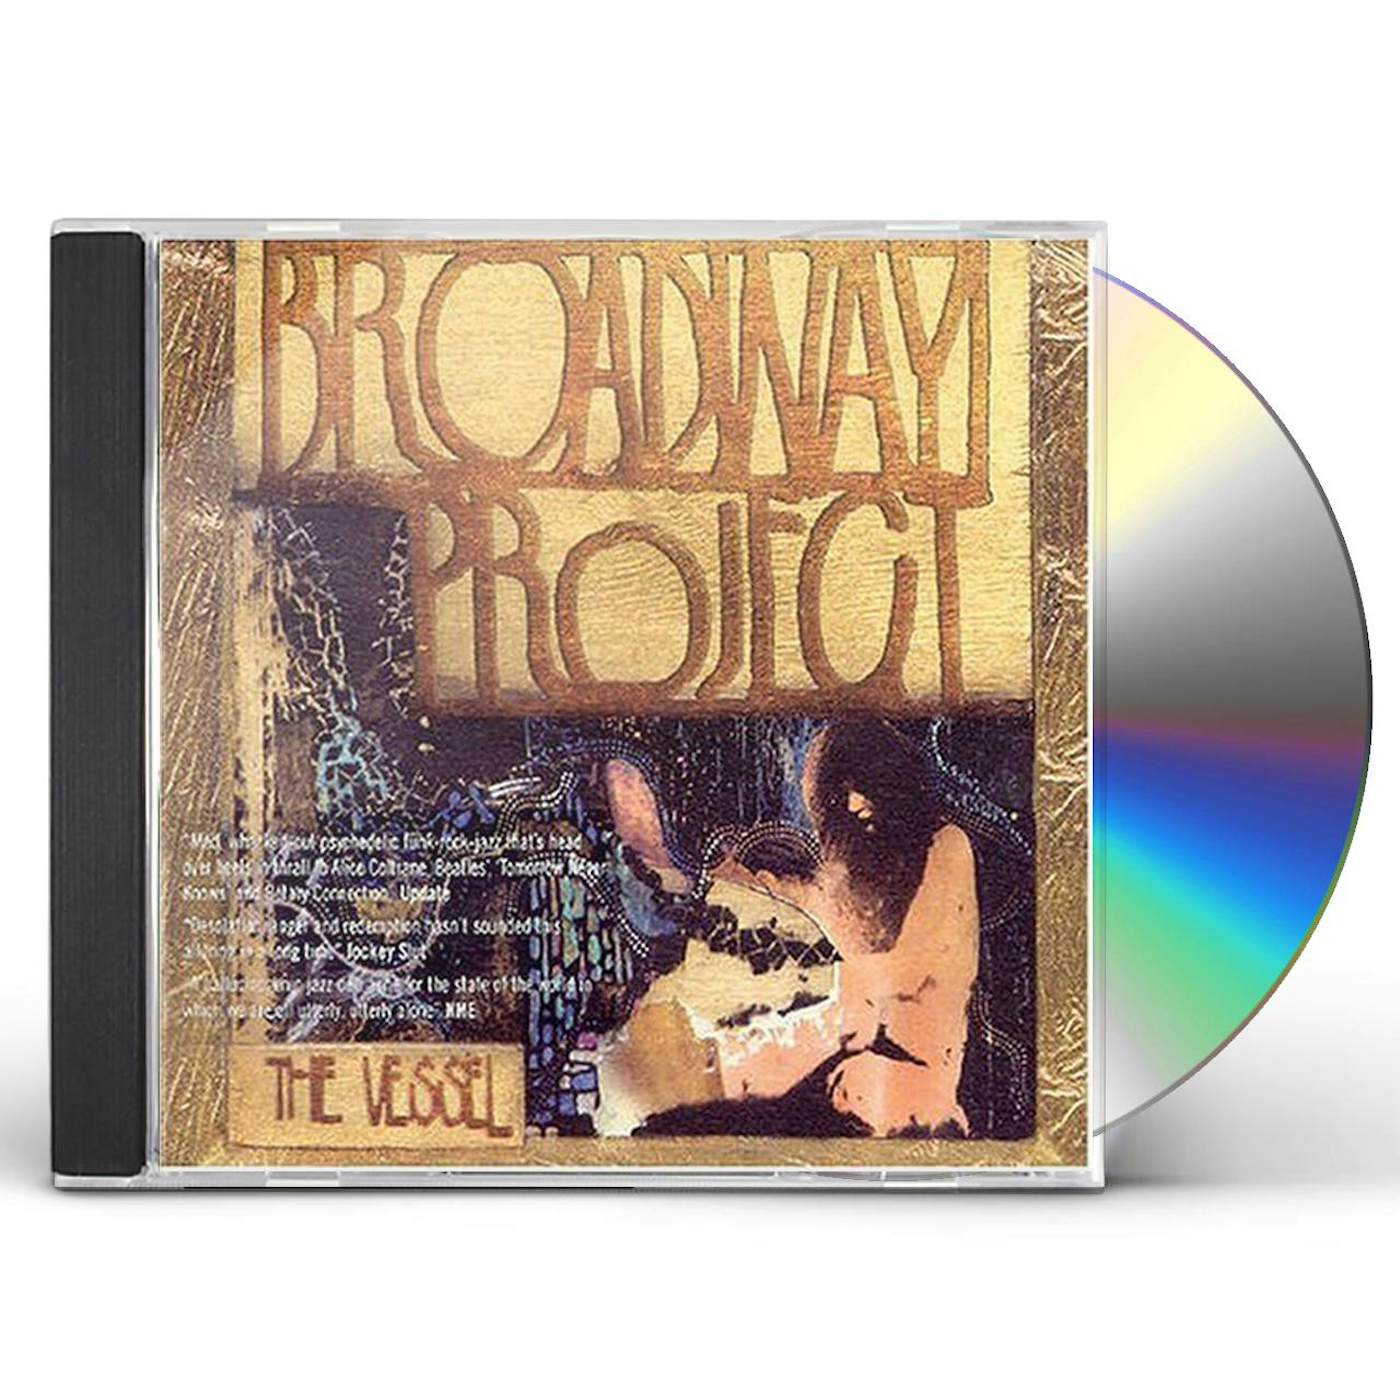 Broadway Project VESSEL CD